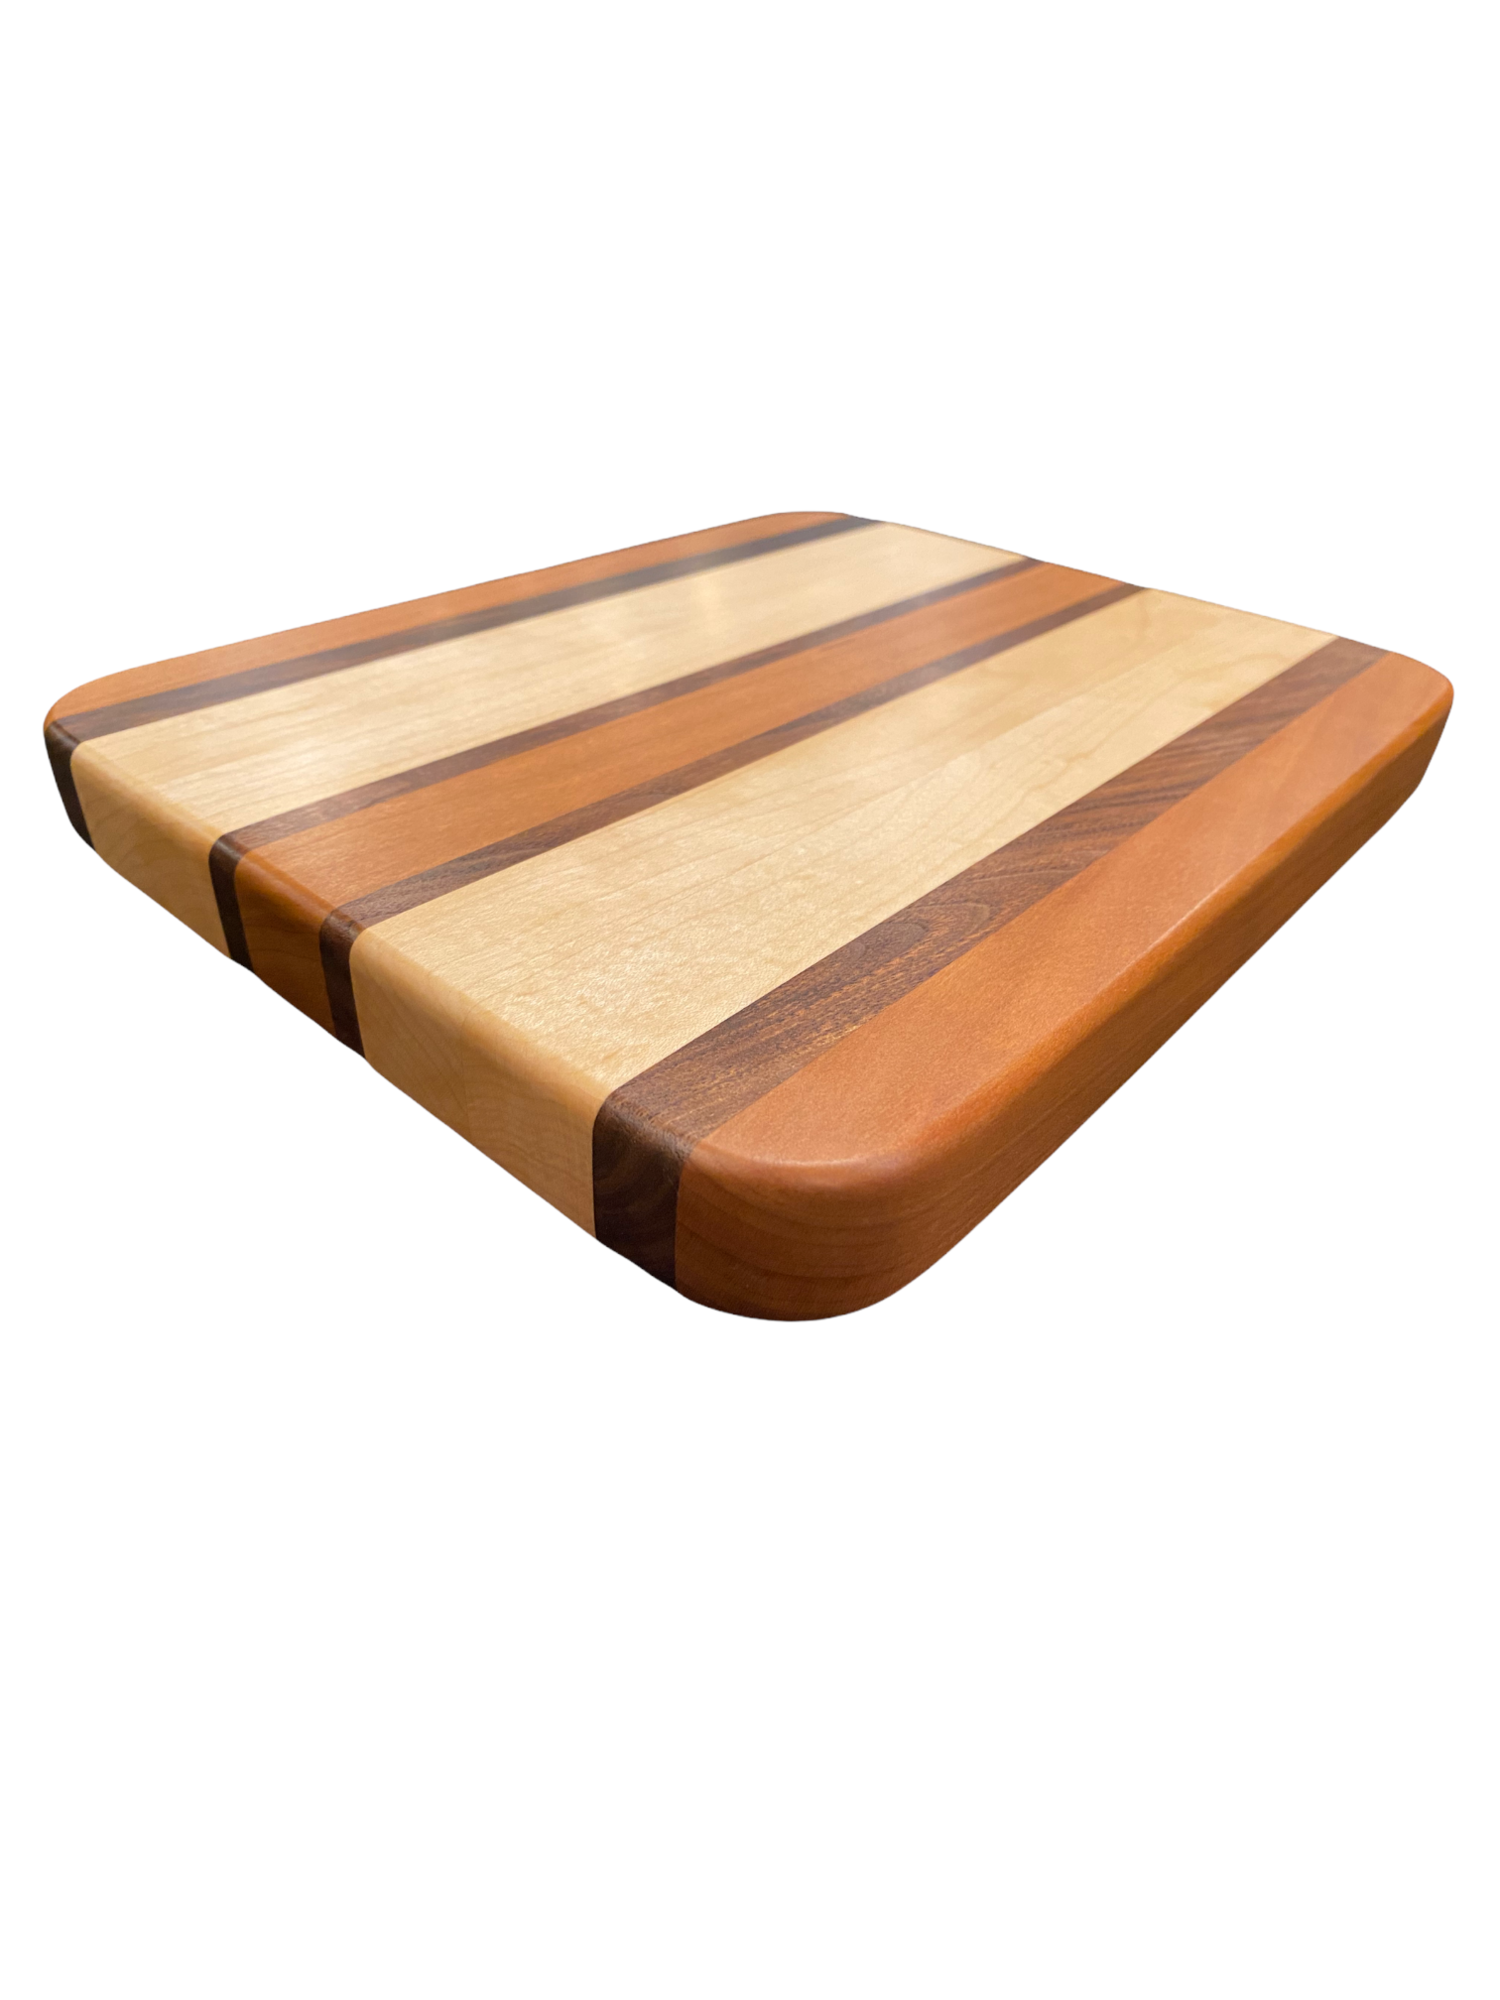 Cherry Wood Cutting Board Kit - Fuji - Medium